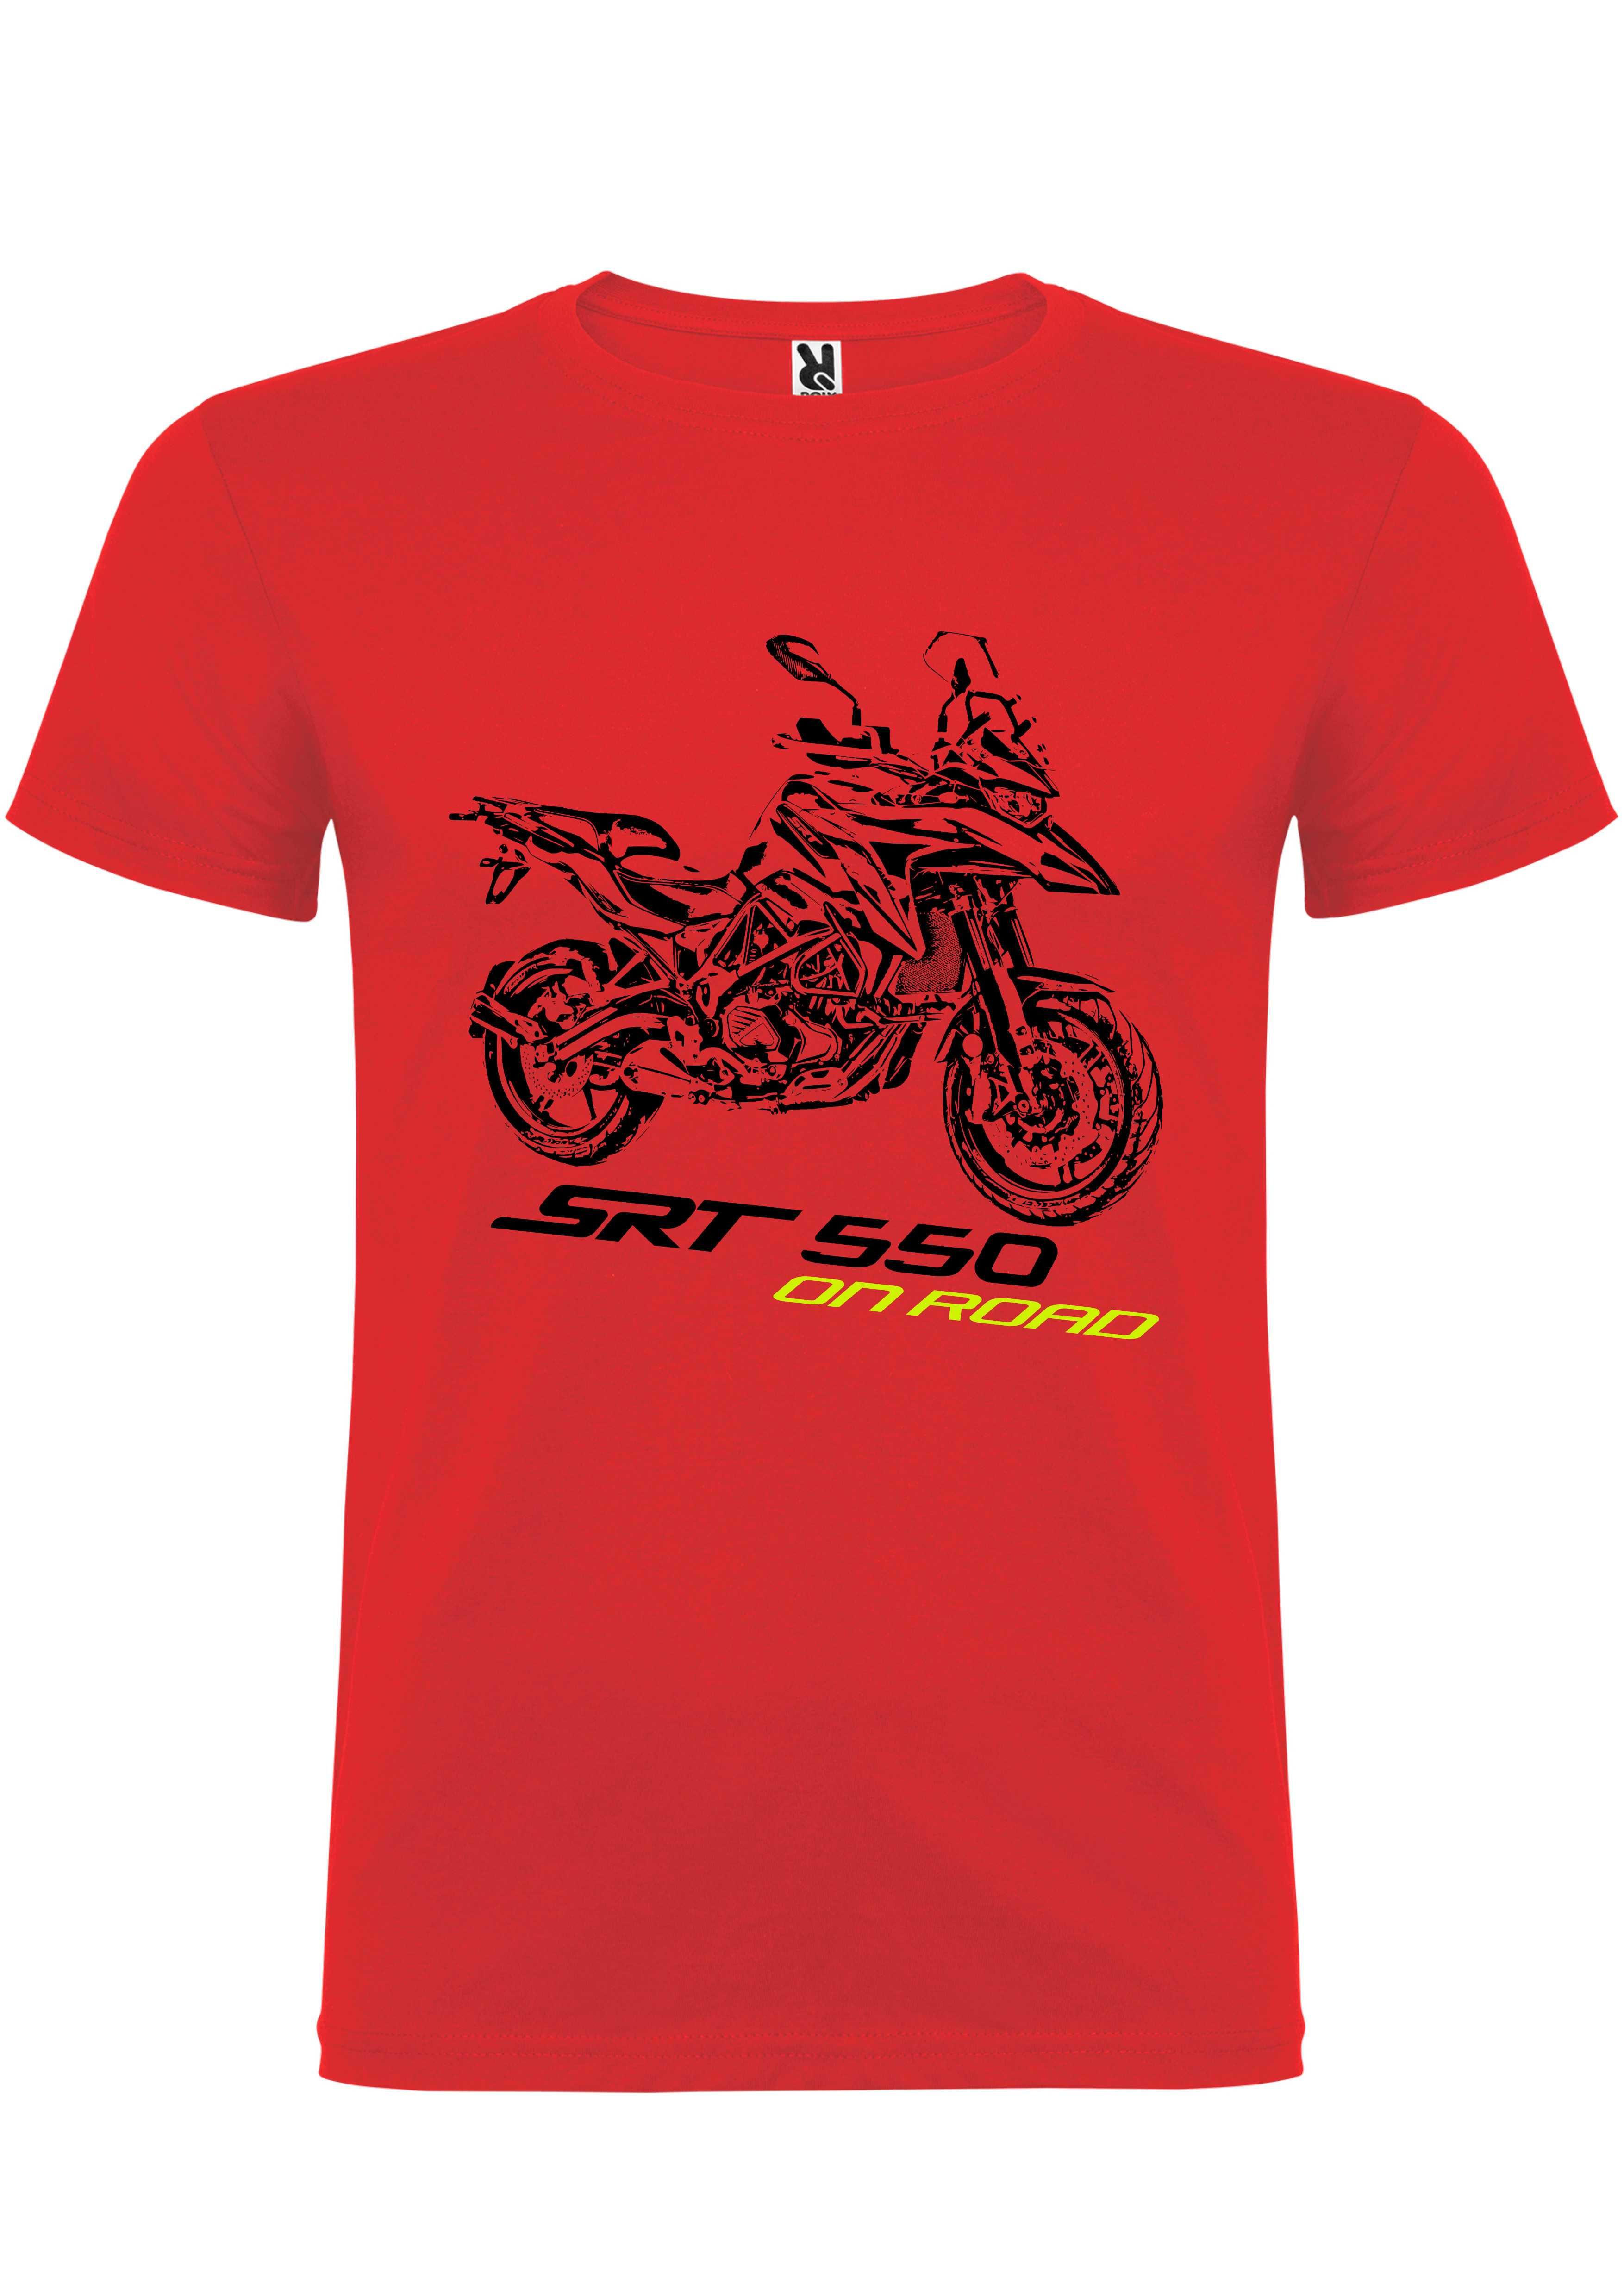 T-shirt QJ Motor SRT 550 On Road